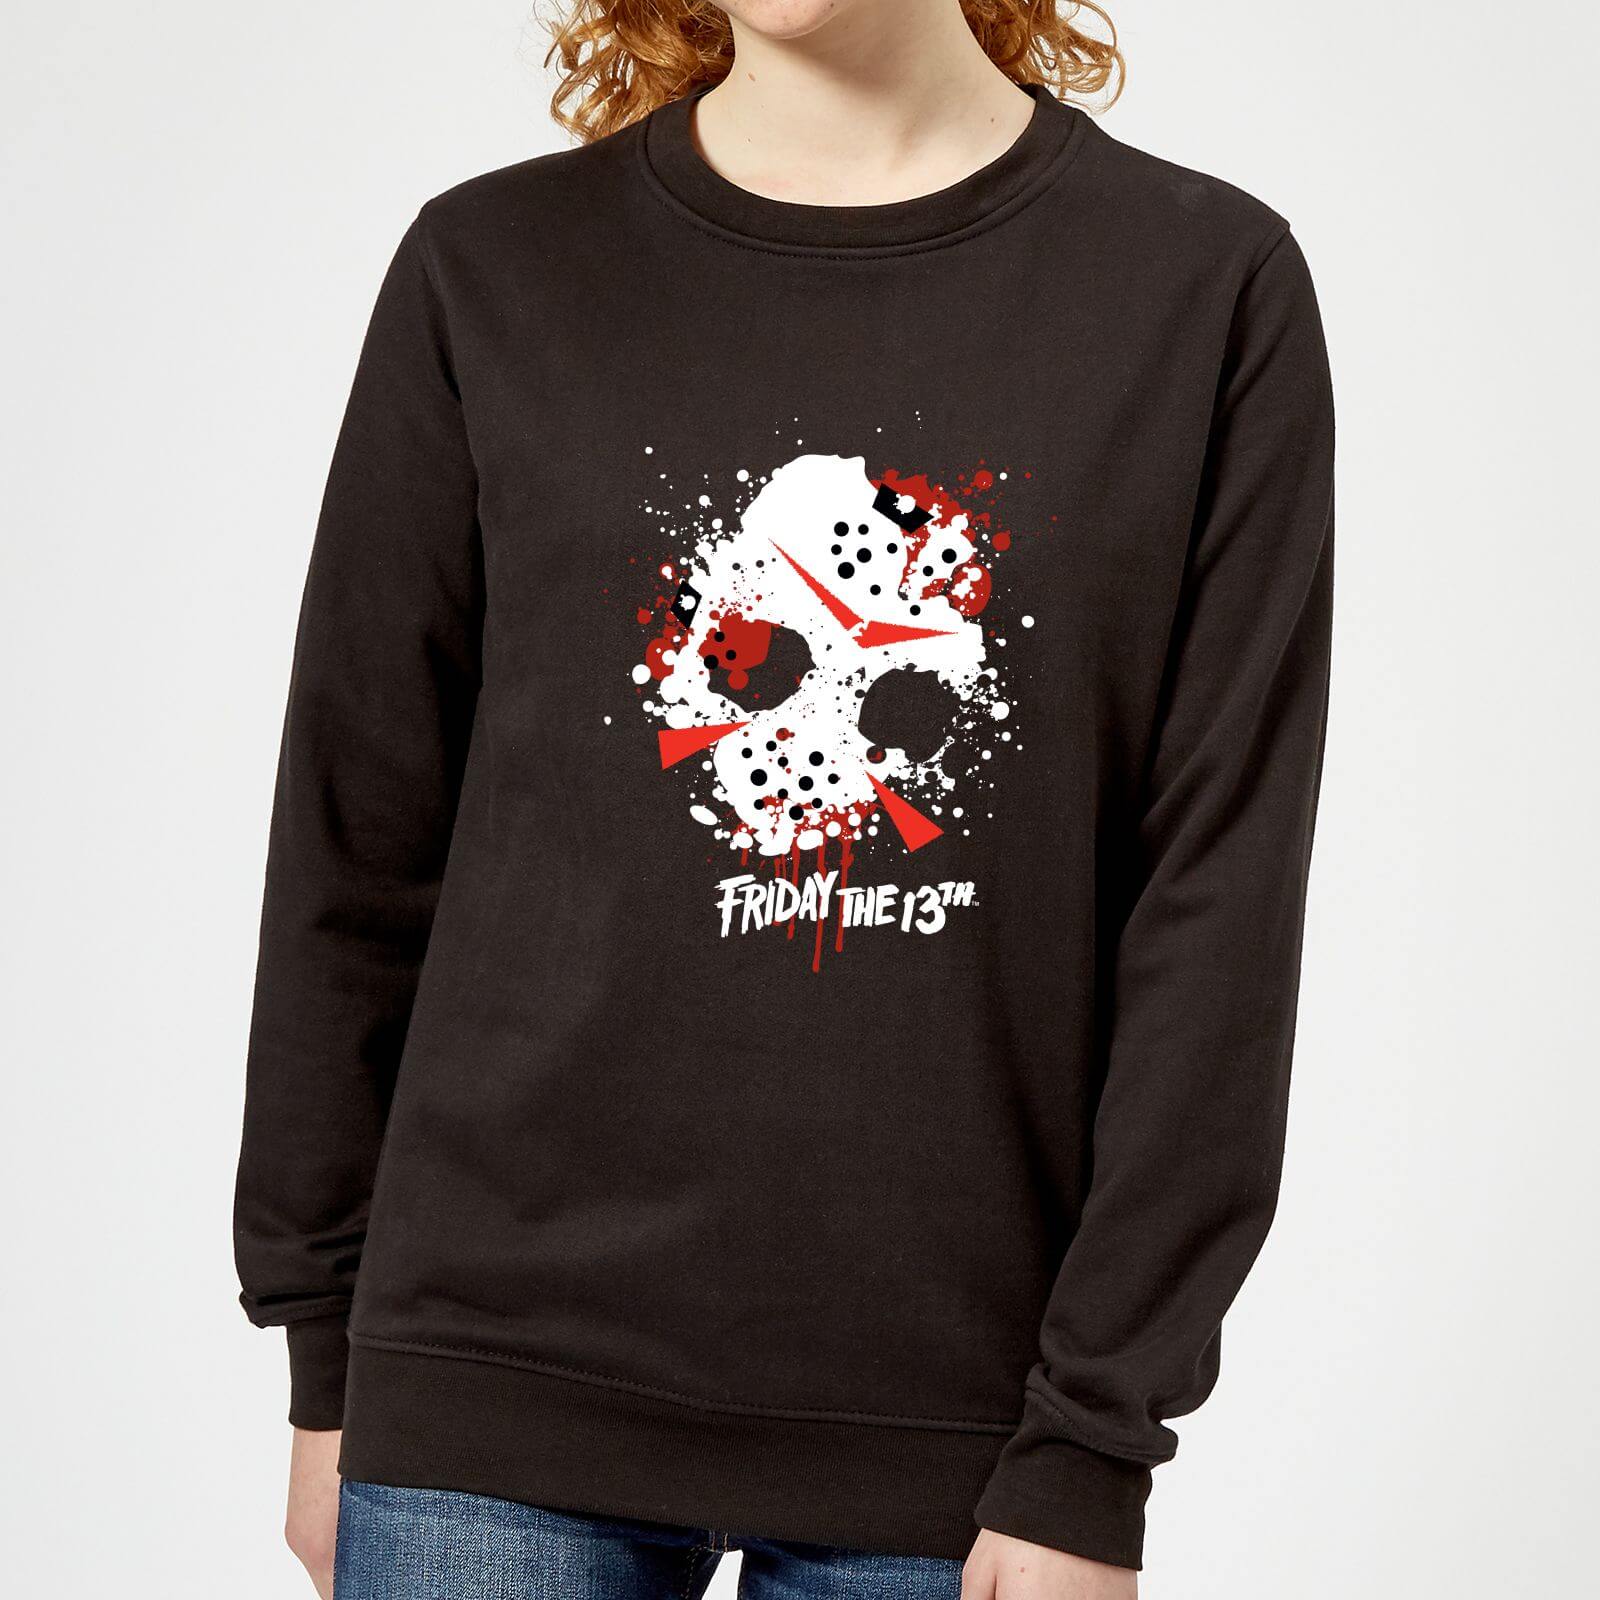 Friday the 13th Mask Splatter Women's Sweatshirt - Black - 5XL - Black